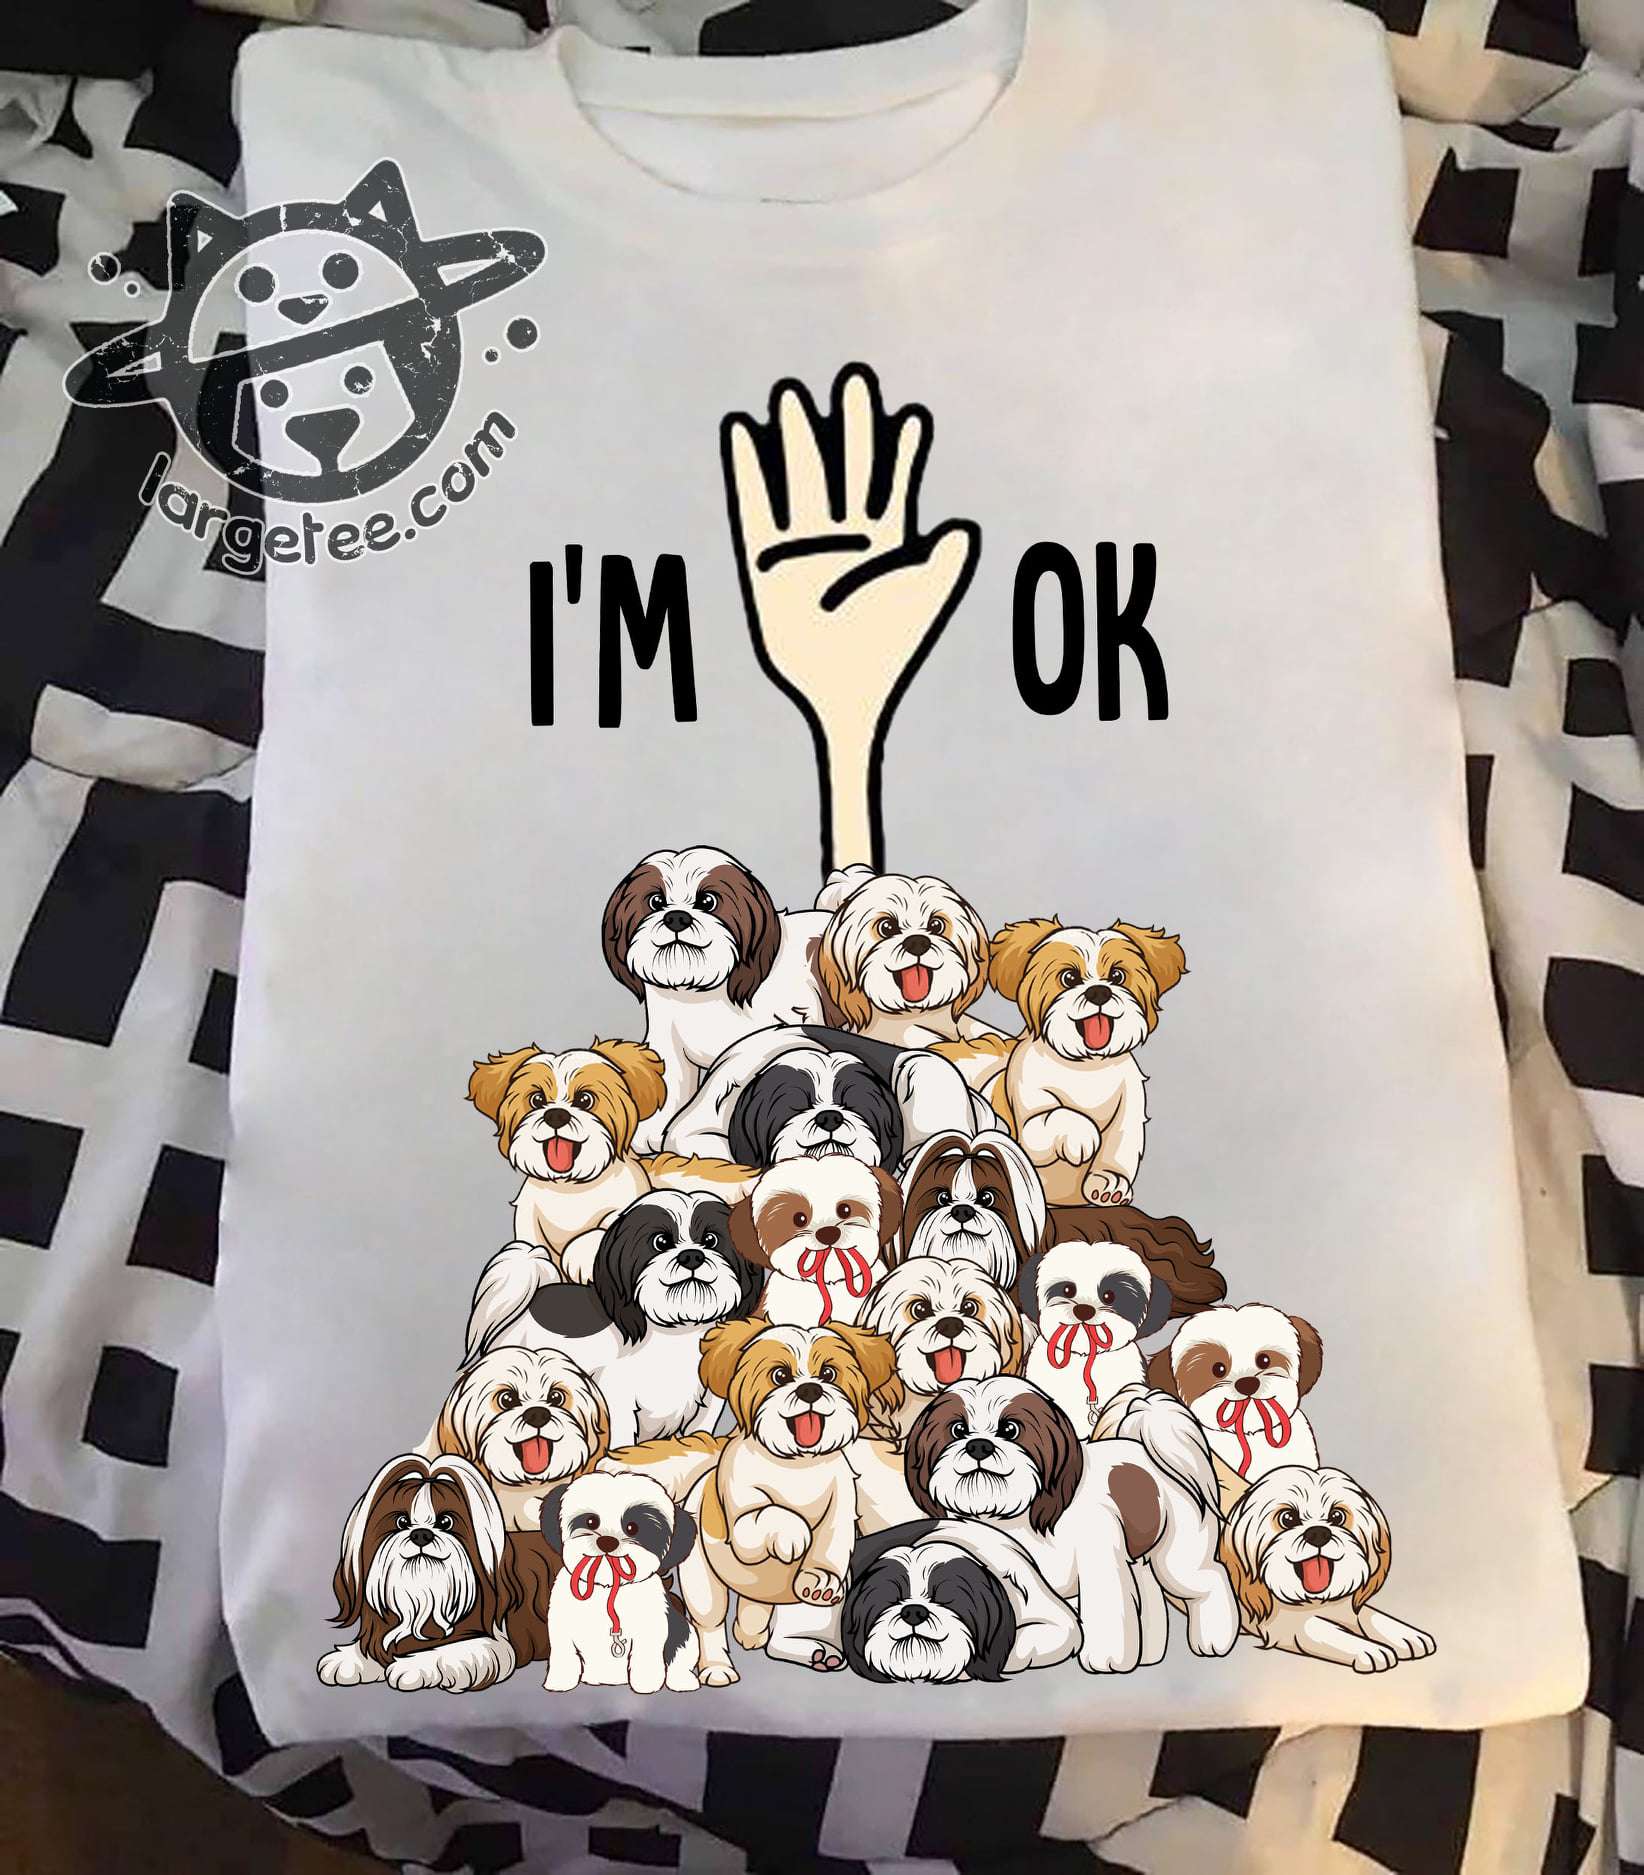 I'm ok - Shih Tzu dog, people and lots of Shih Tzu, T-shirt for dog lover